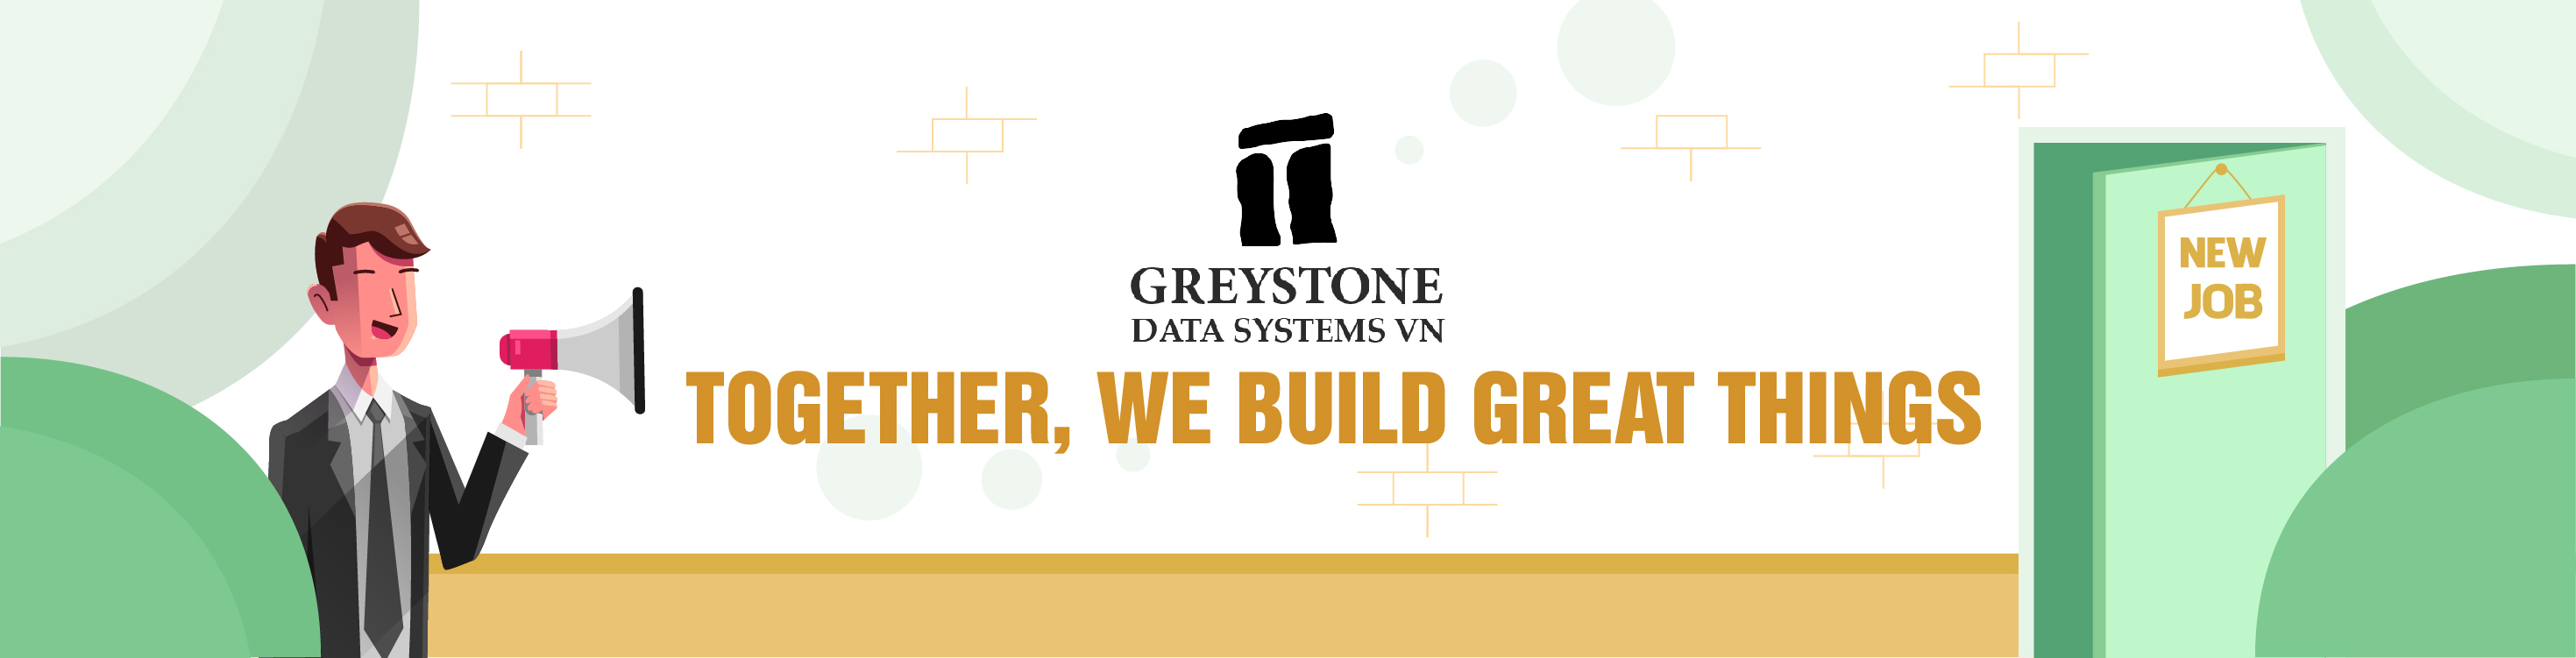 Công ty TNHH Greystone Data Systems Việt Nam